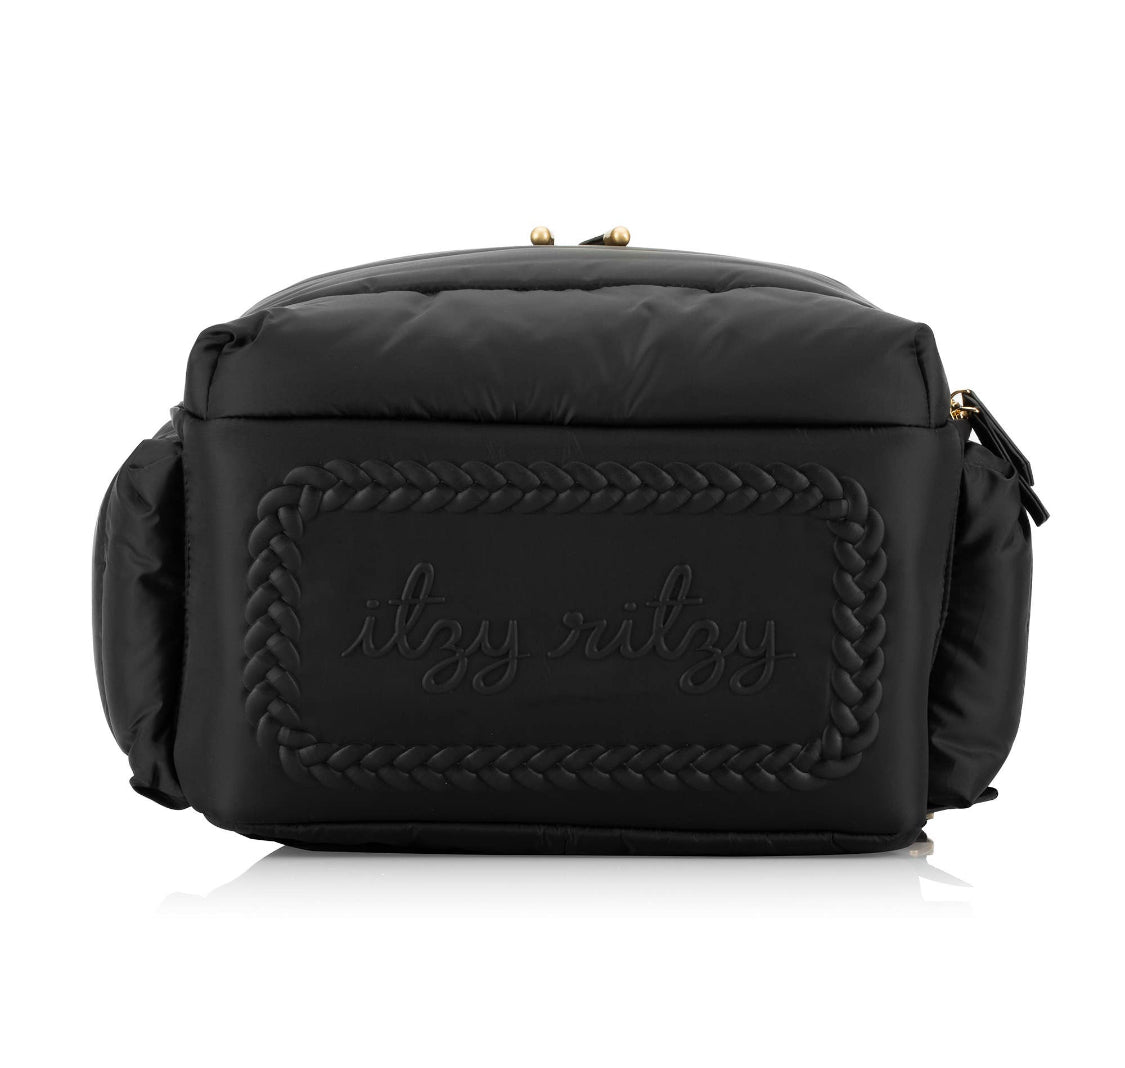 Black Dream Backpack Diaper Bag